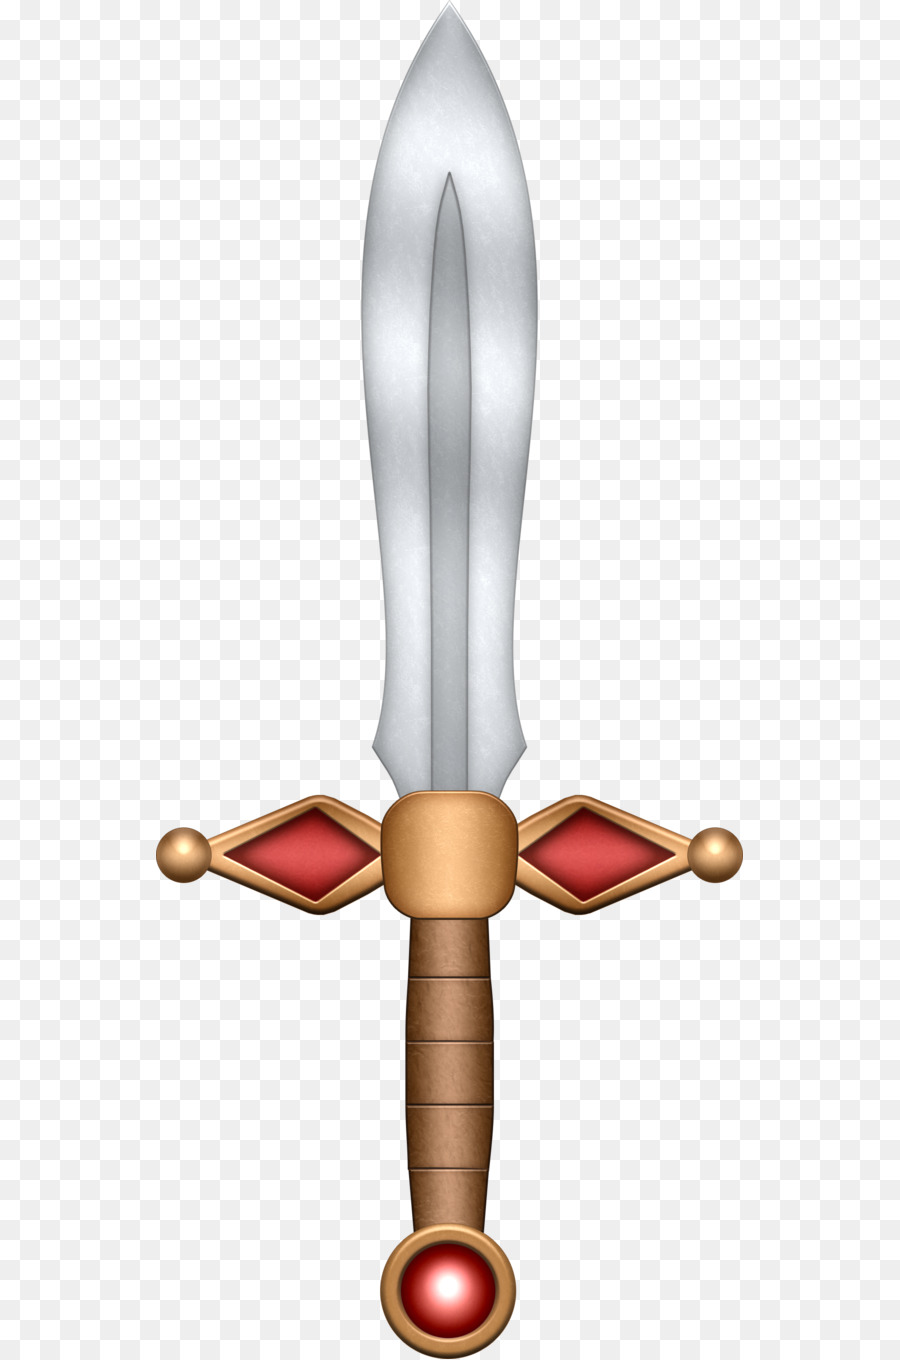 Link Magic sword The Legend of Zelda Cartoon - Sword png download - 587*1359 - Free Transparent Link png Download.